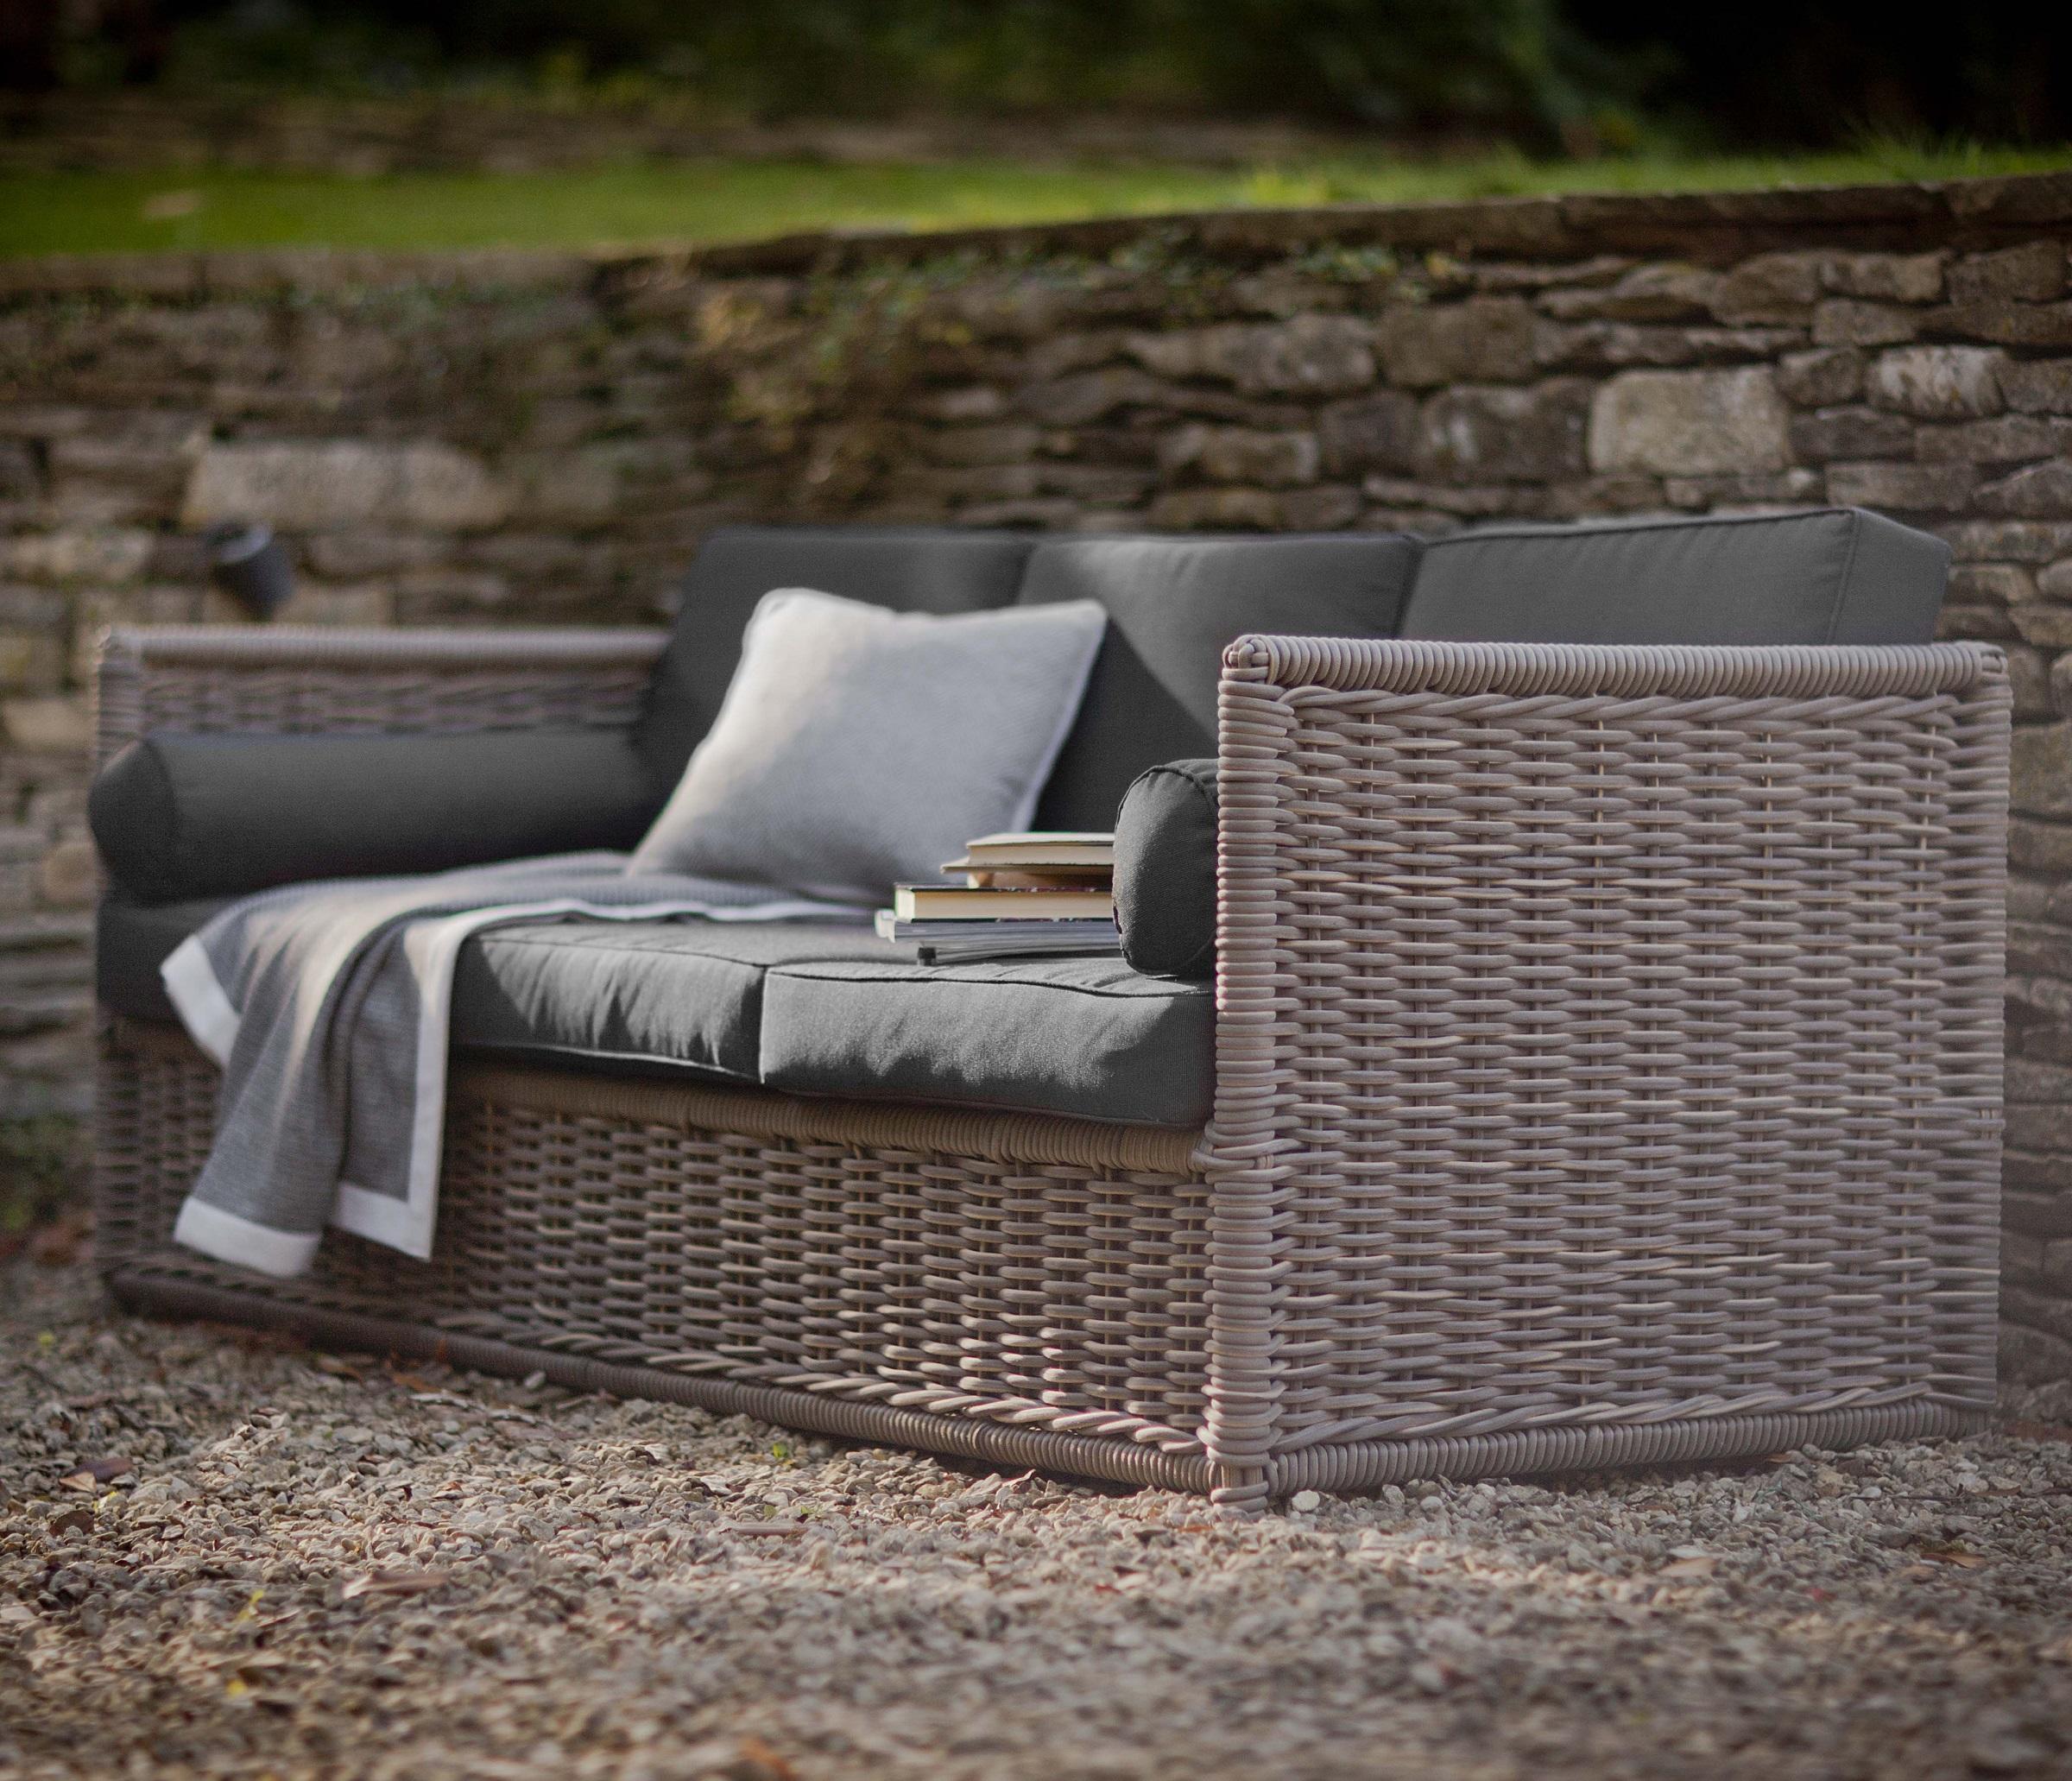 rattan-garden-outdoor-sofa-lounge-furniture-3-seater-all-weather-showerproof-cushions